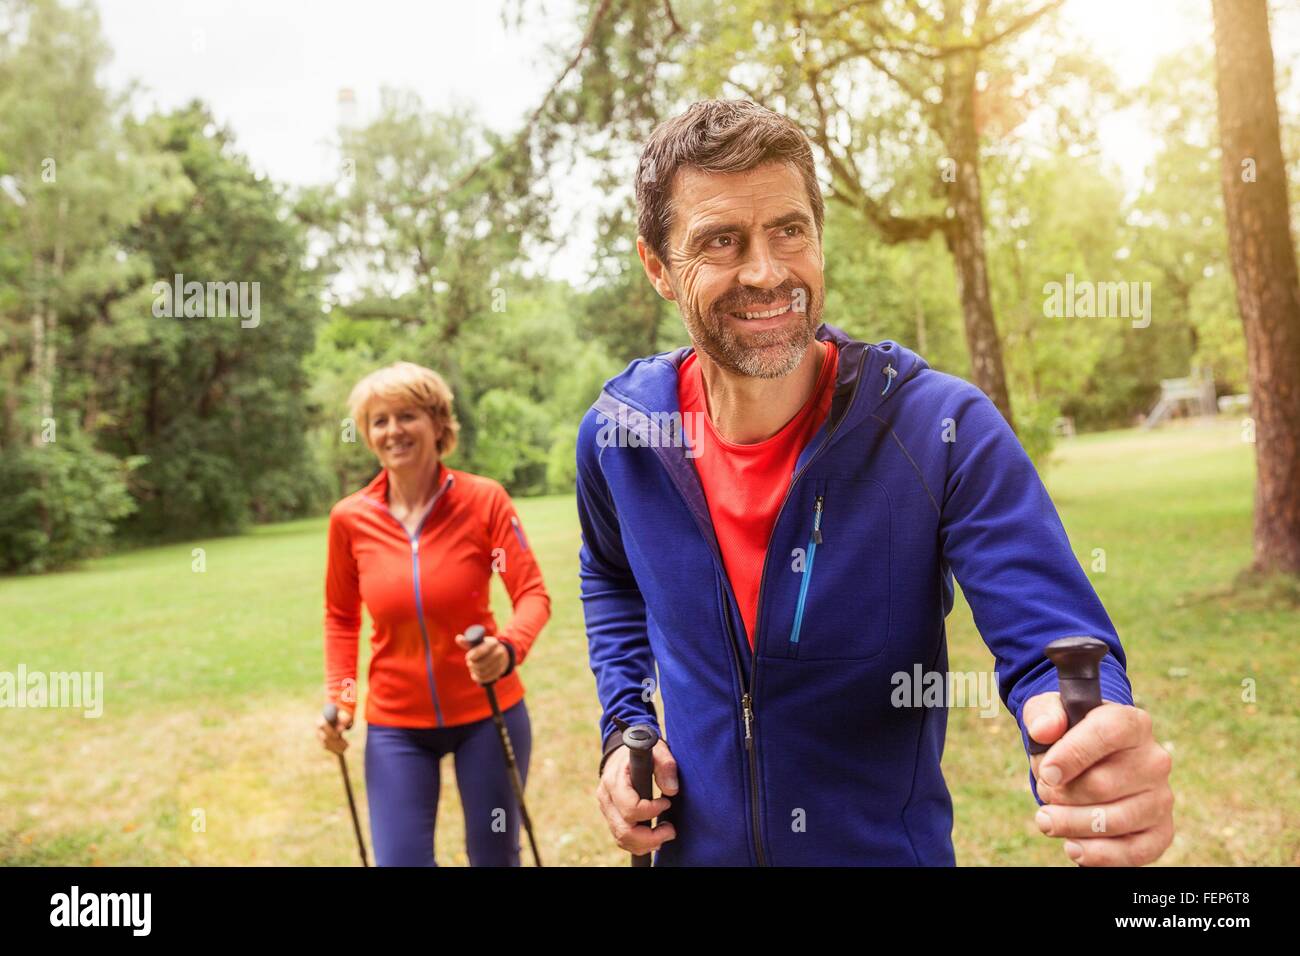 Couple walking outdoors, using walking poles Stock Photo